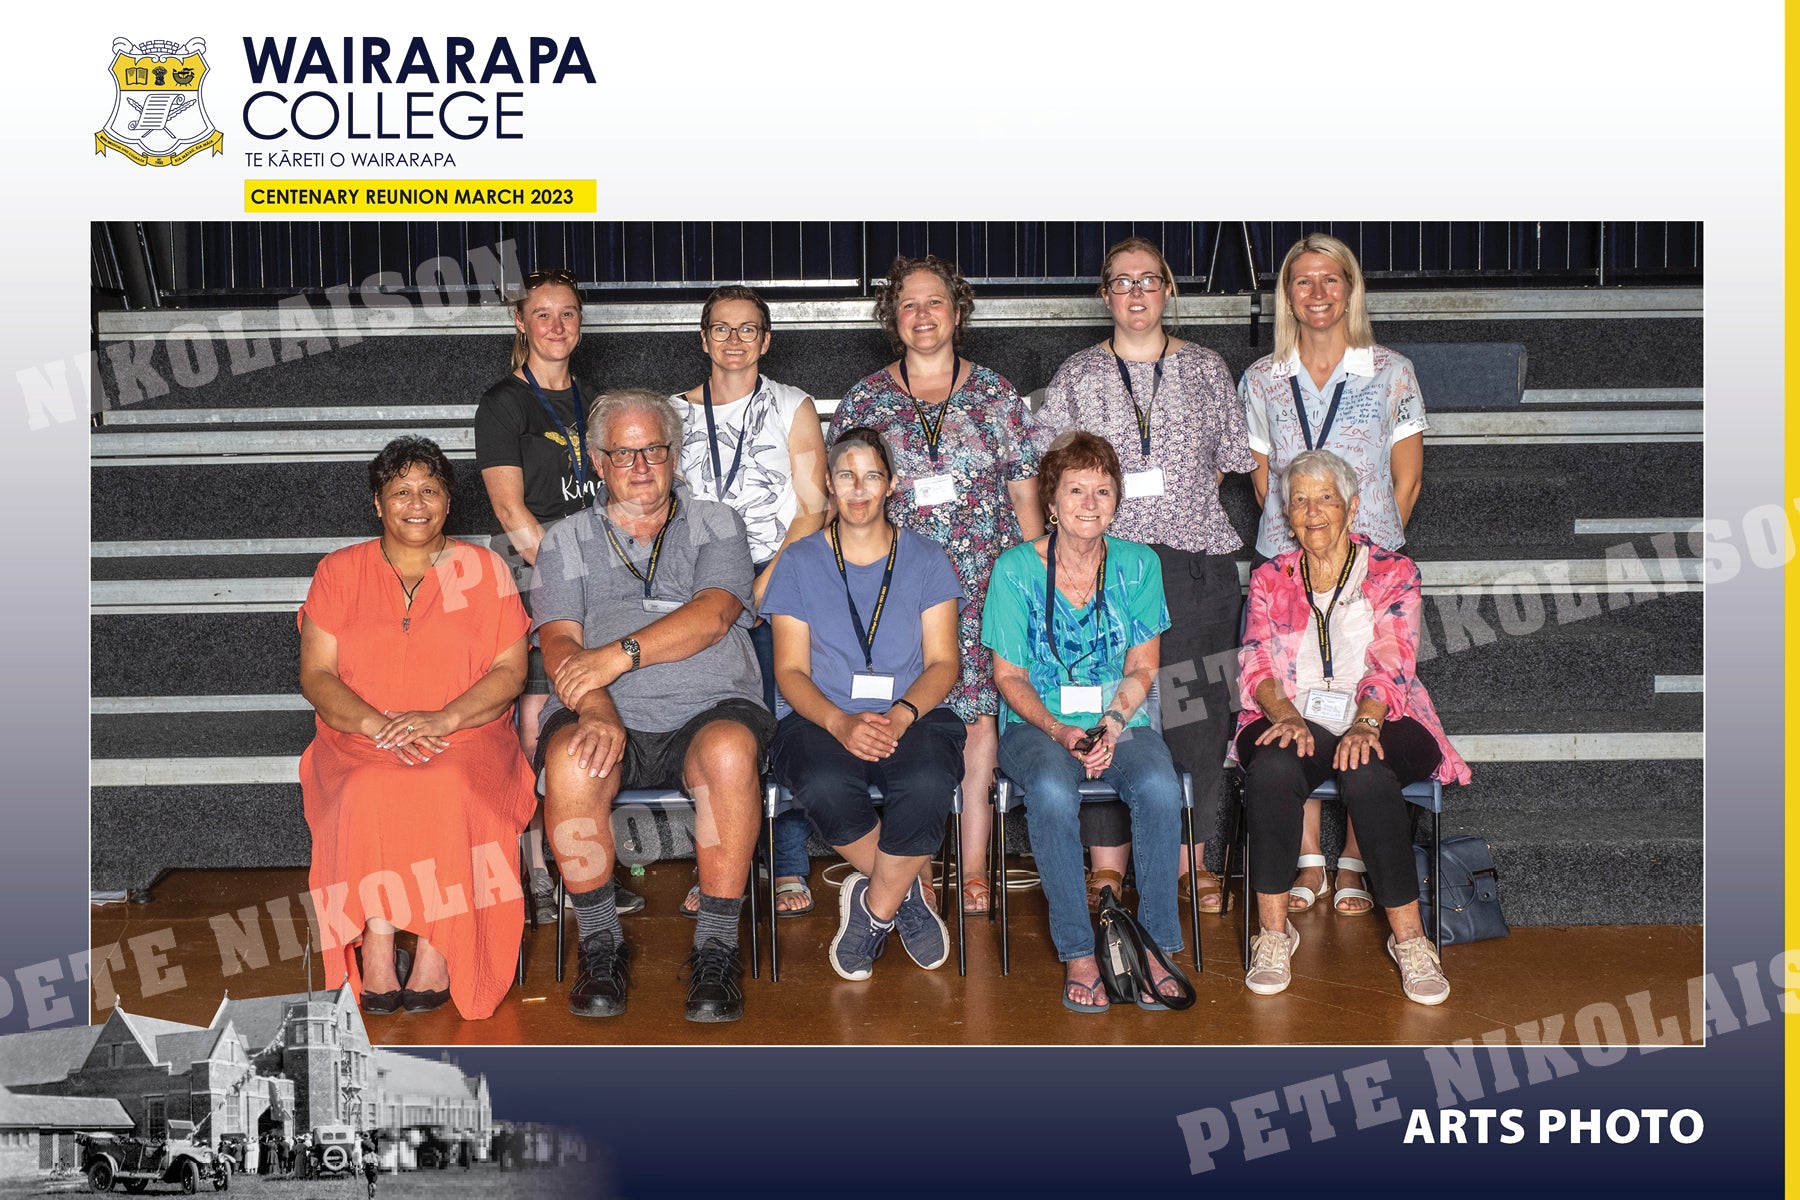 Arts Photo - Wairarapa College Centenary